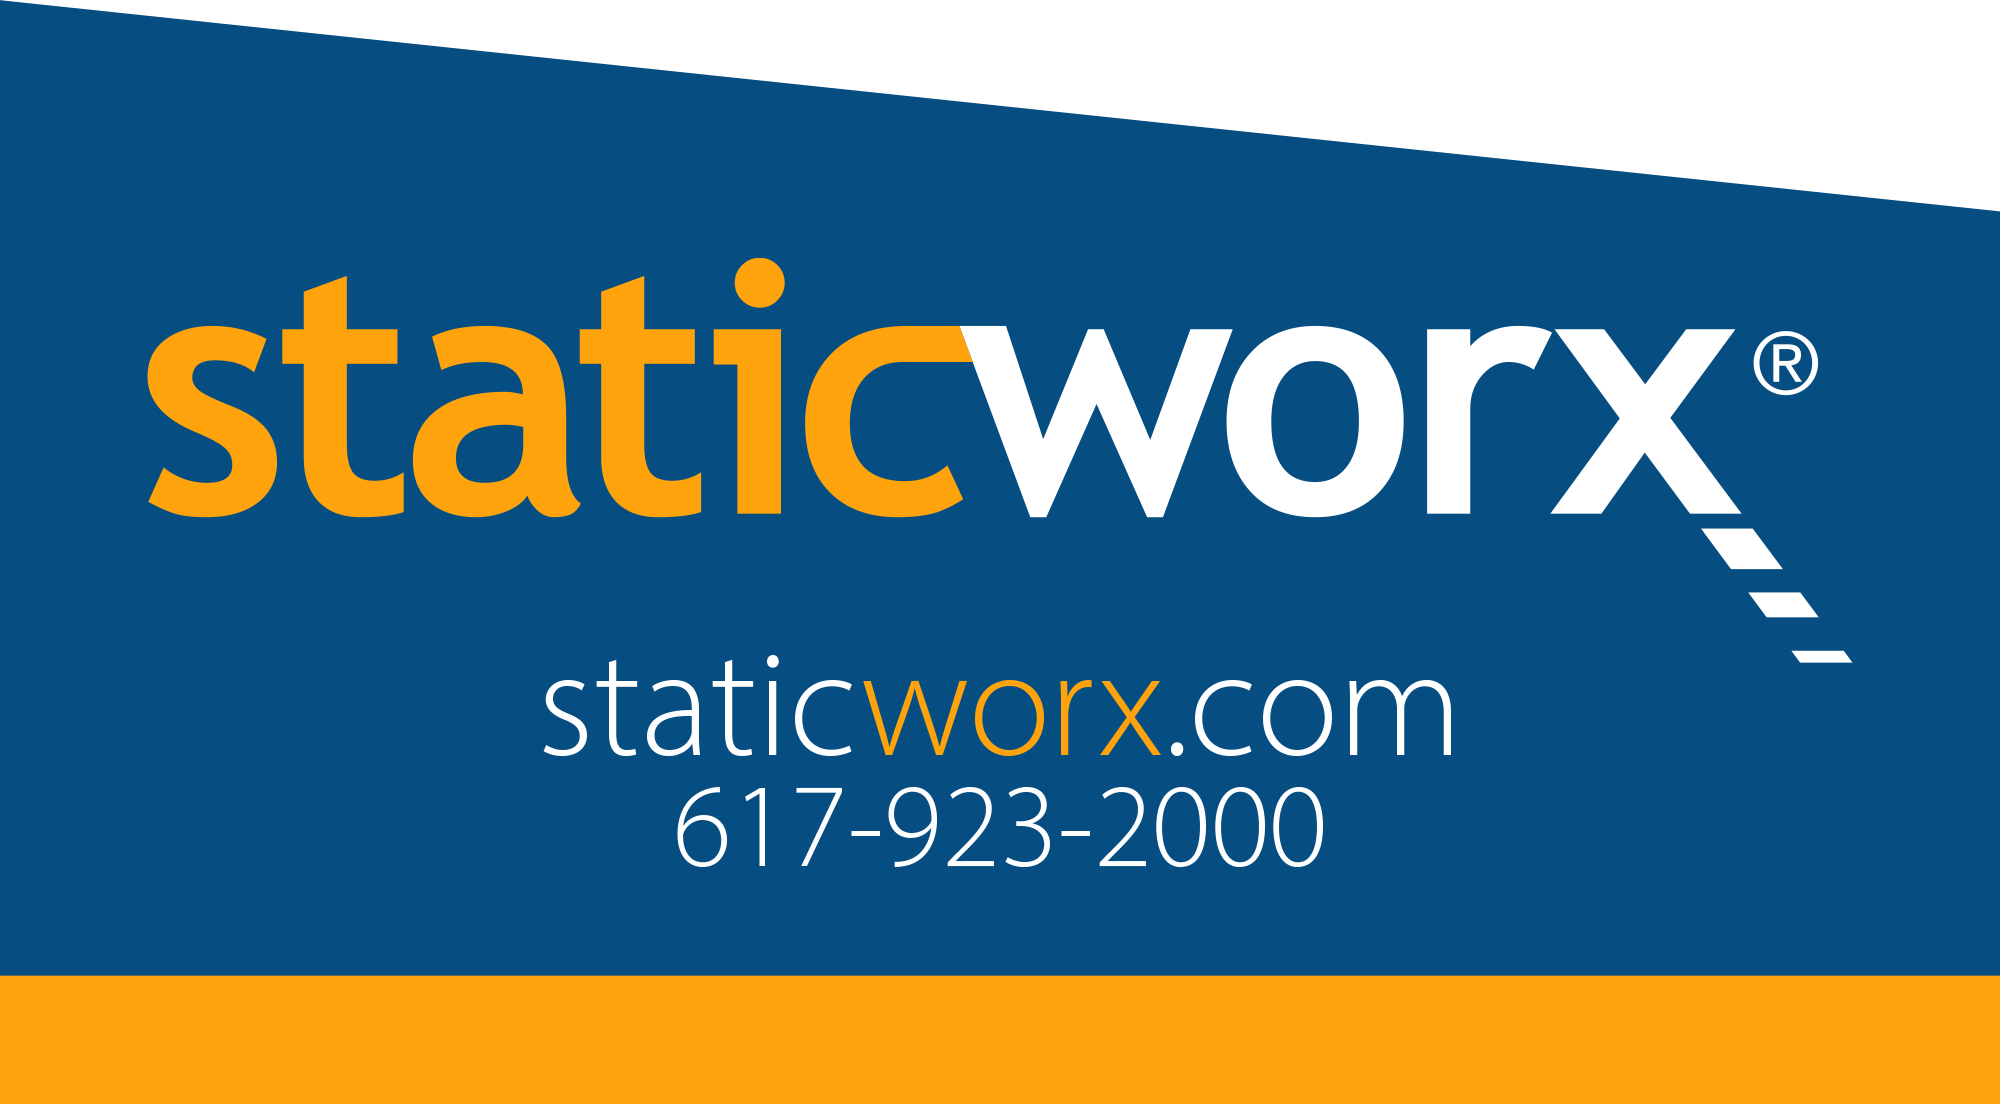 staticworx logo and website